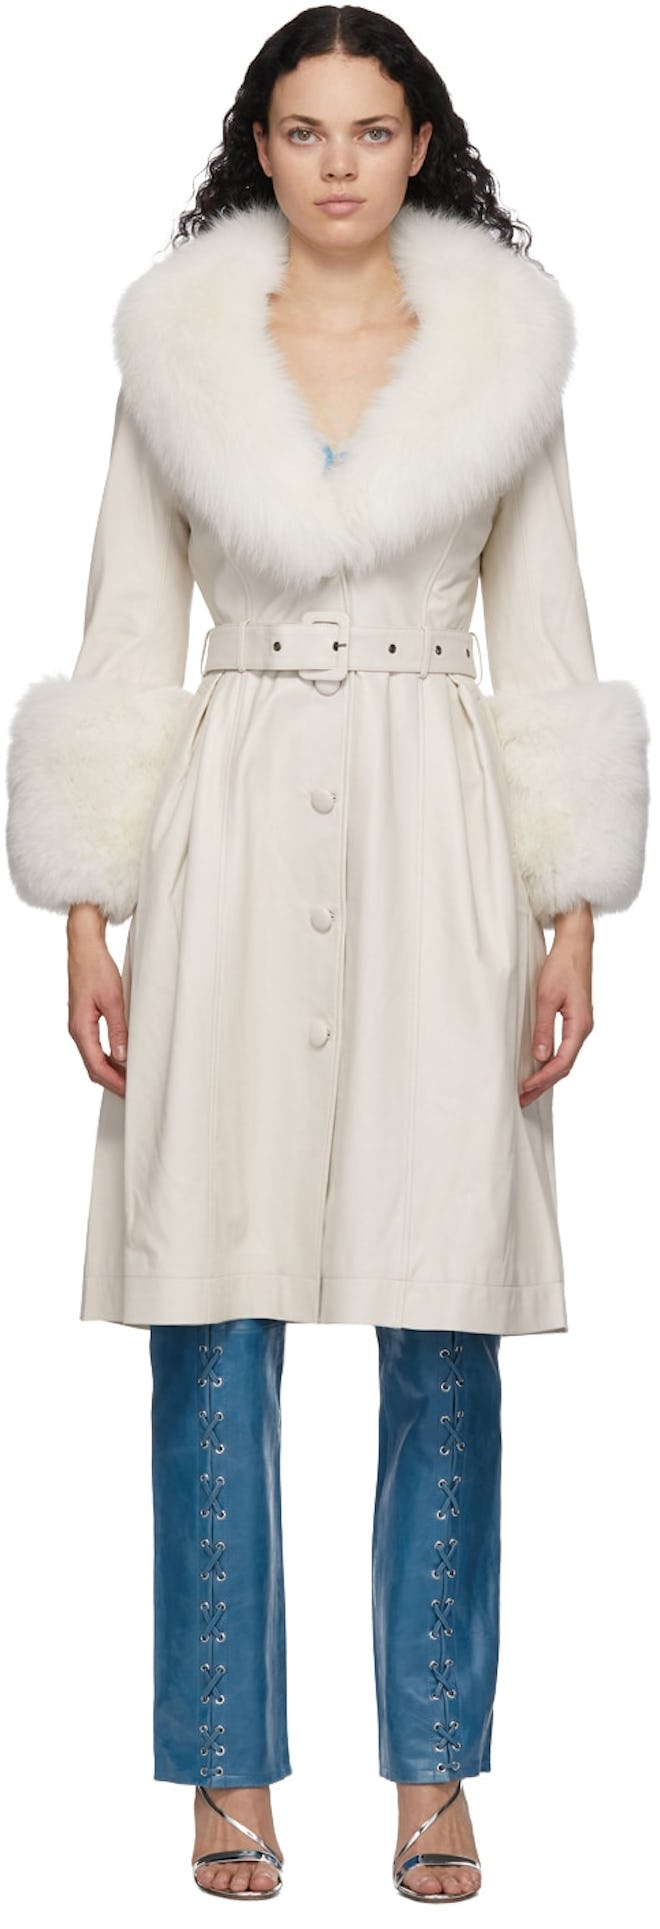 White Fur Foxy Coat